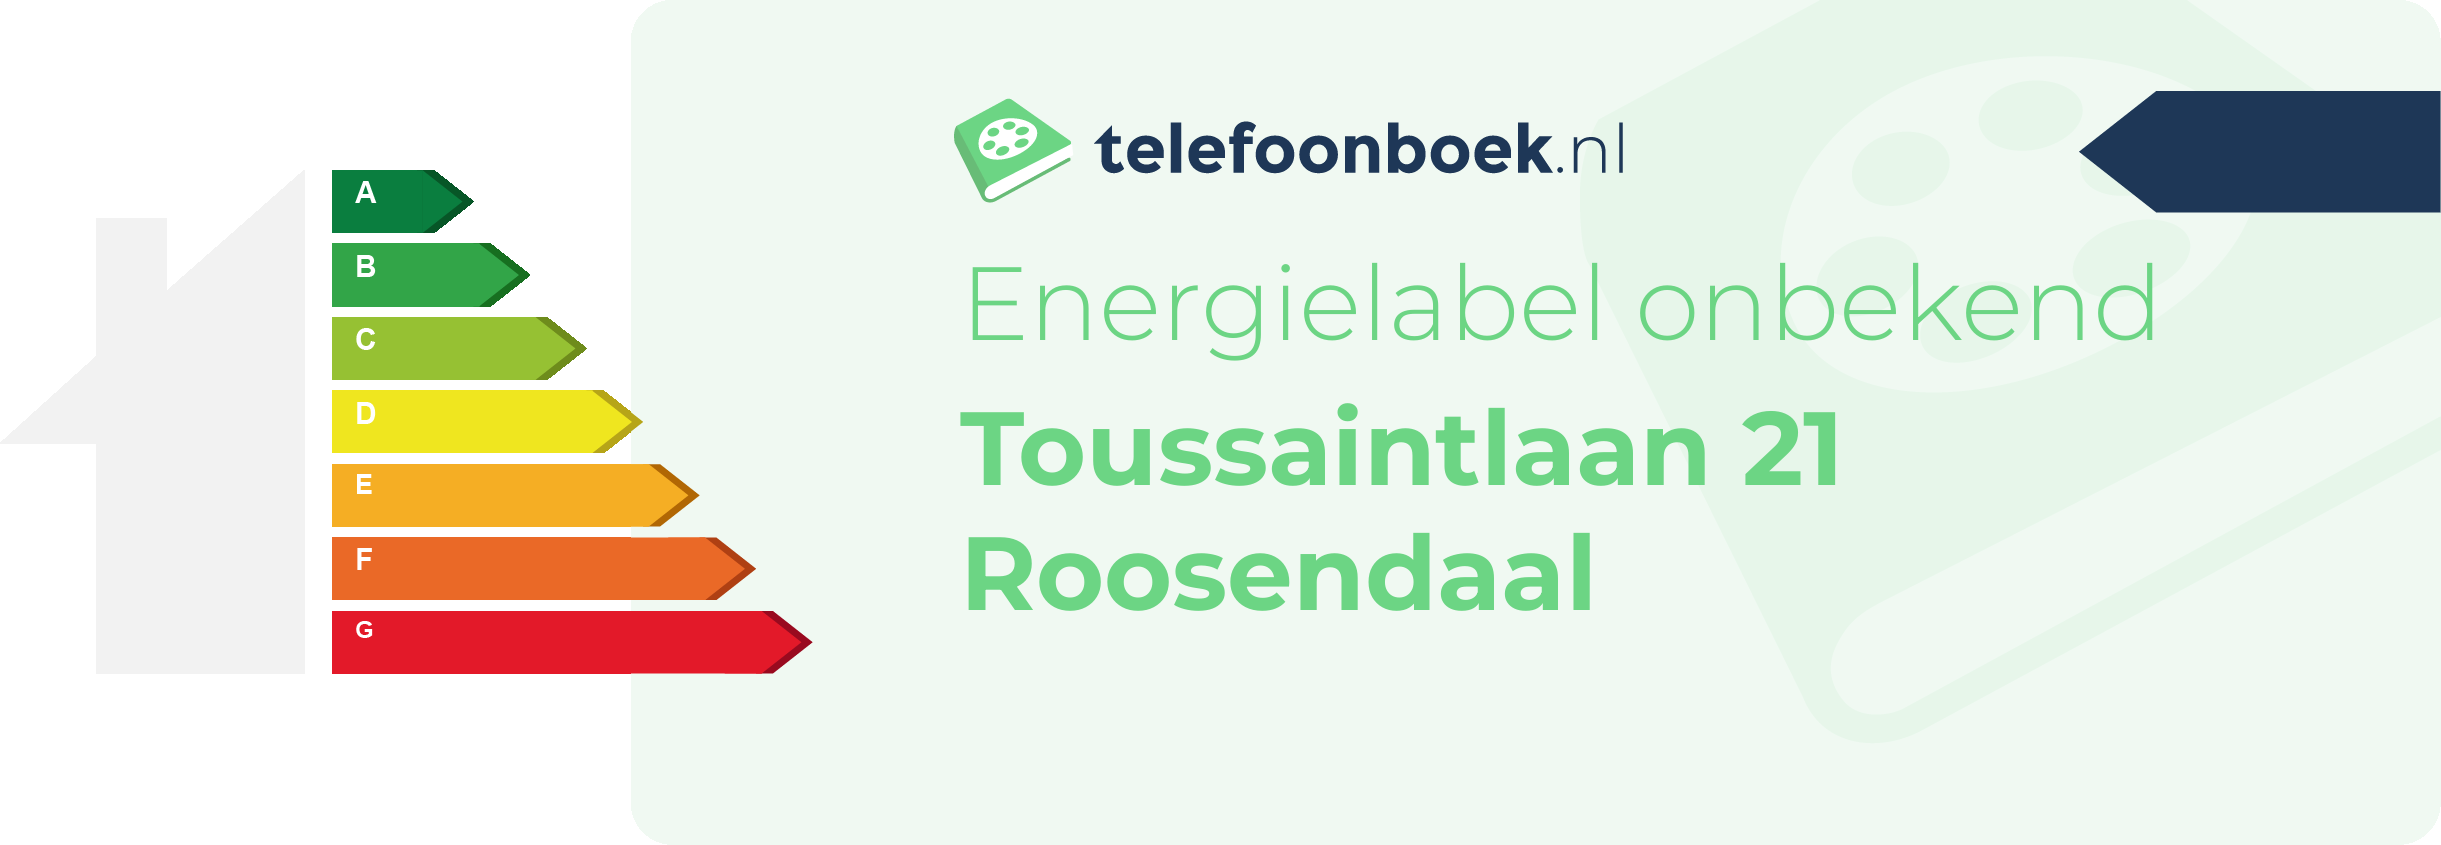 Energielabel Toussaintlaan 21 Roosendaal